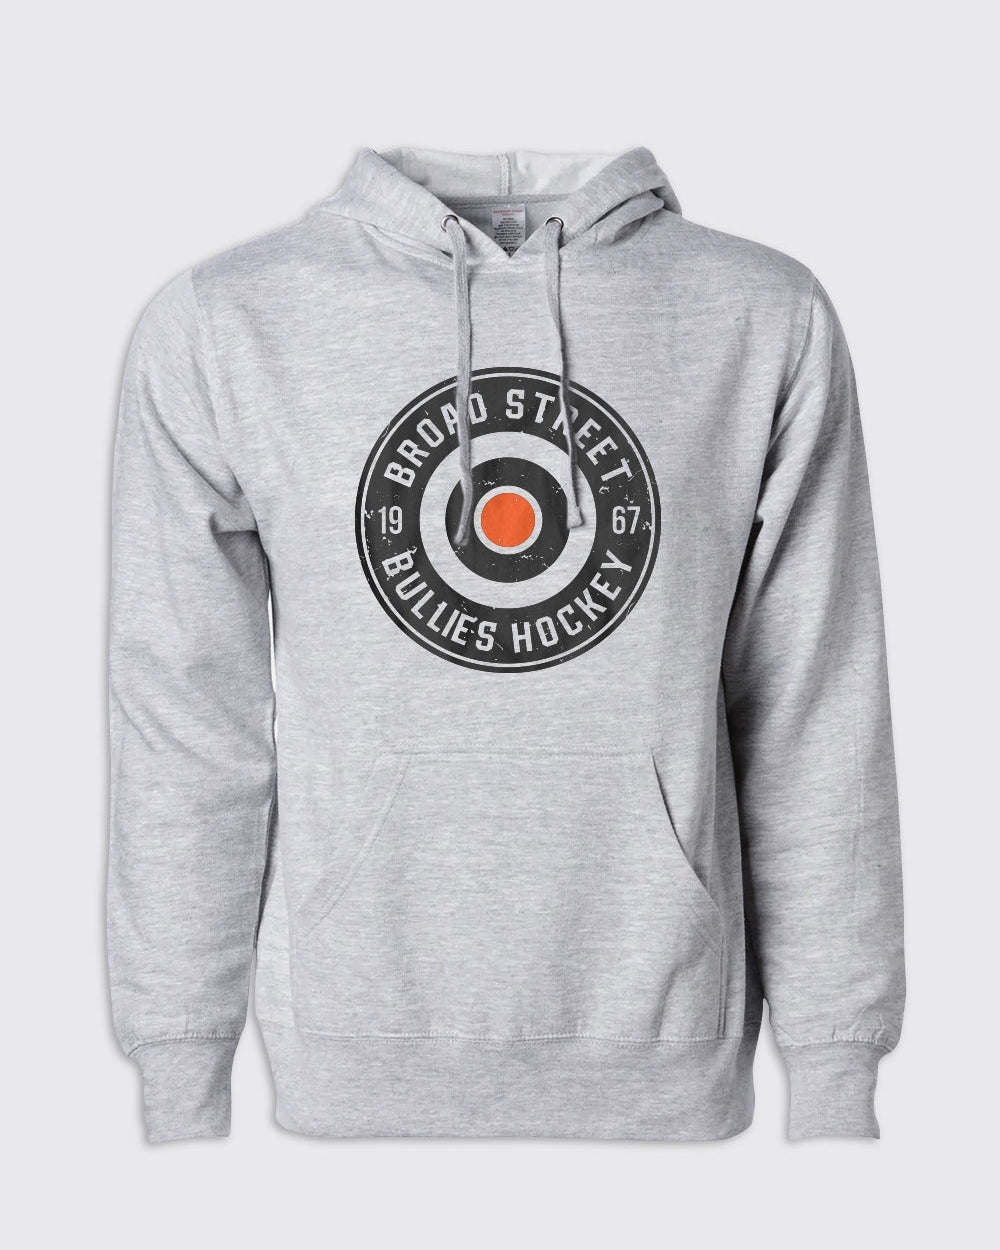 Philadelphia Flyers-Broad Street Bullies Hockey Hoodie-Grey Heather-Philly Sports Shirts